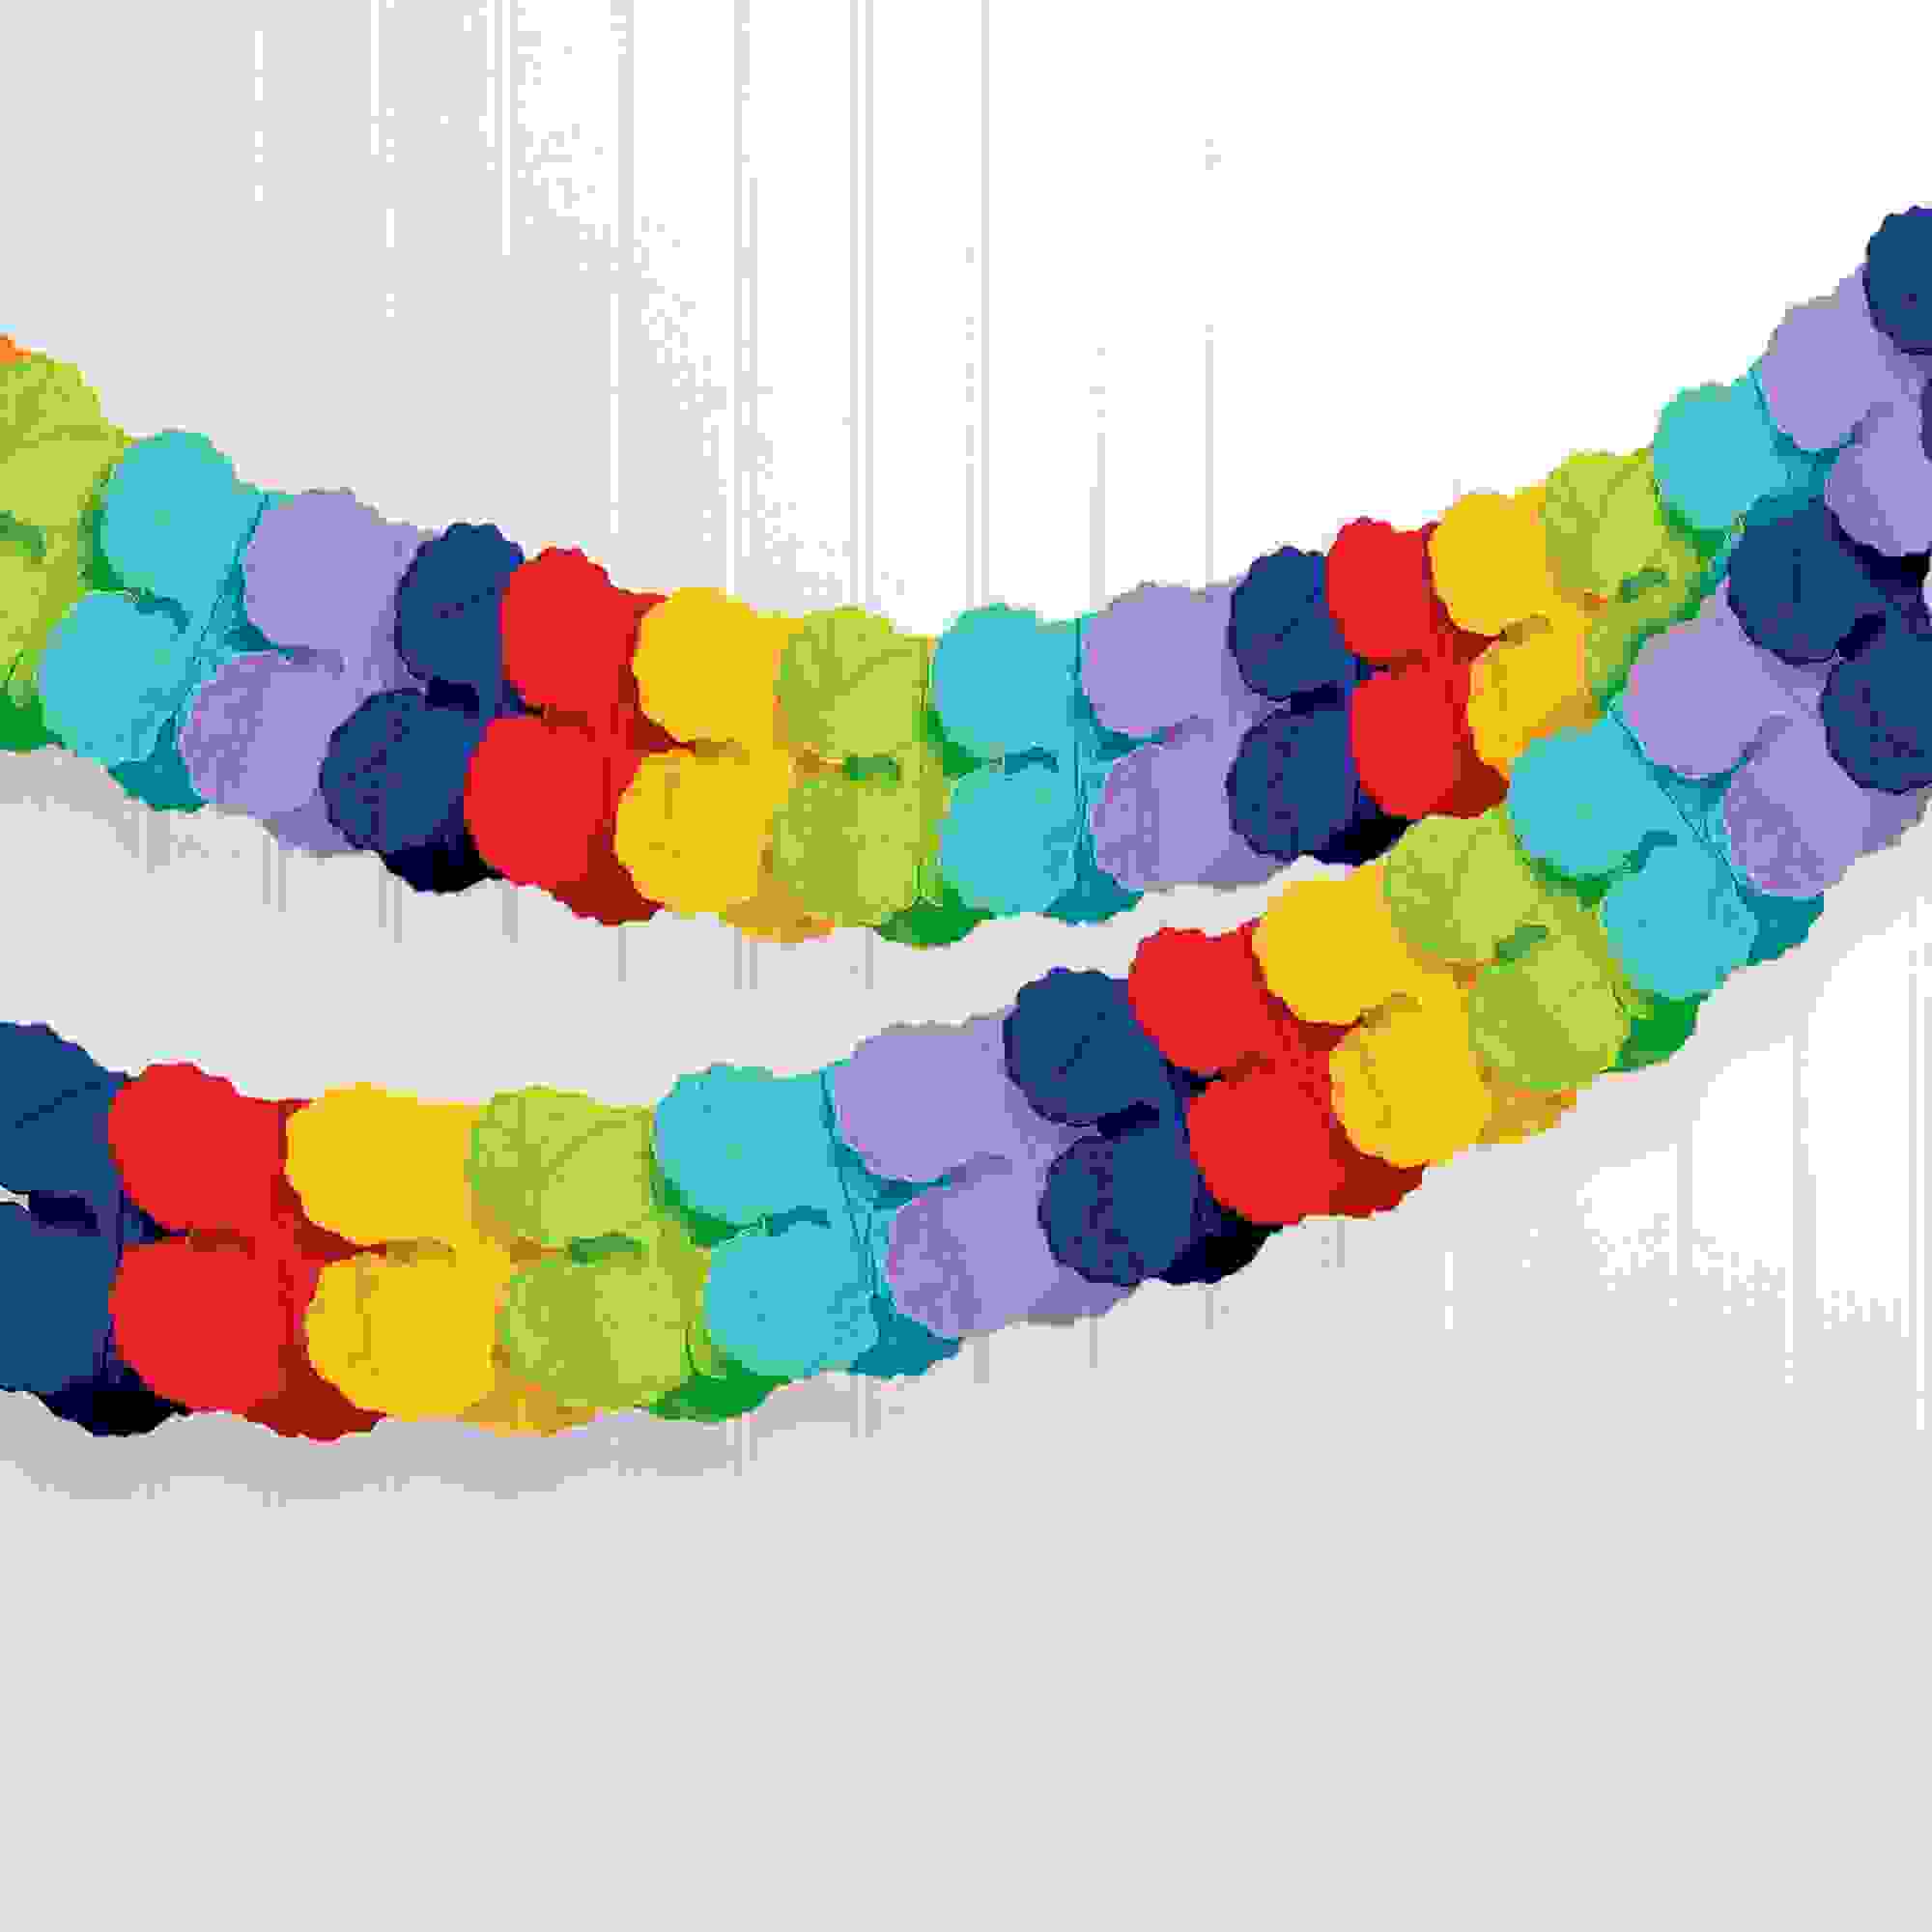 Rainbow Multicolor Paper Garland, 12ft